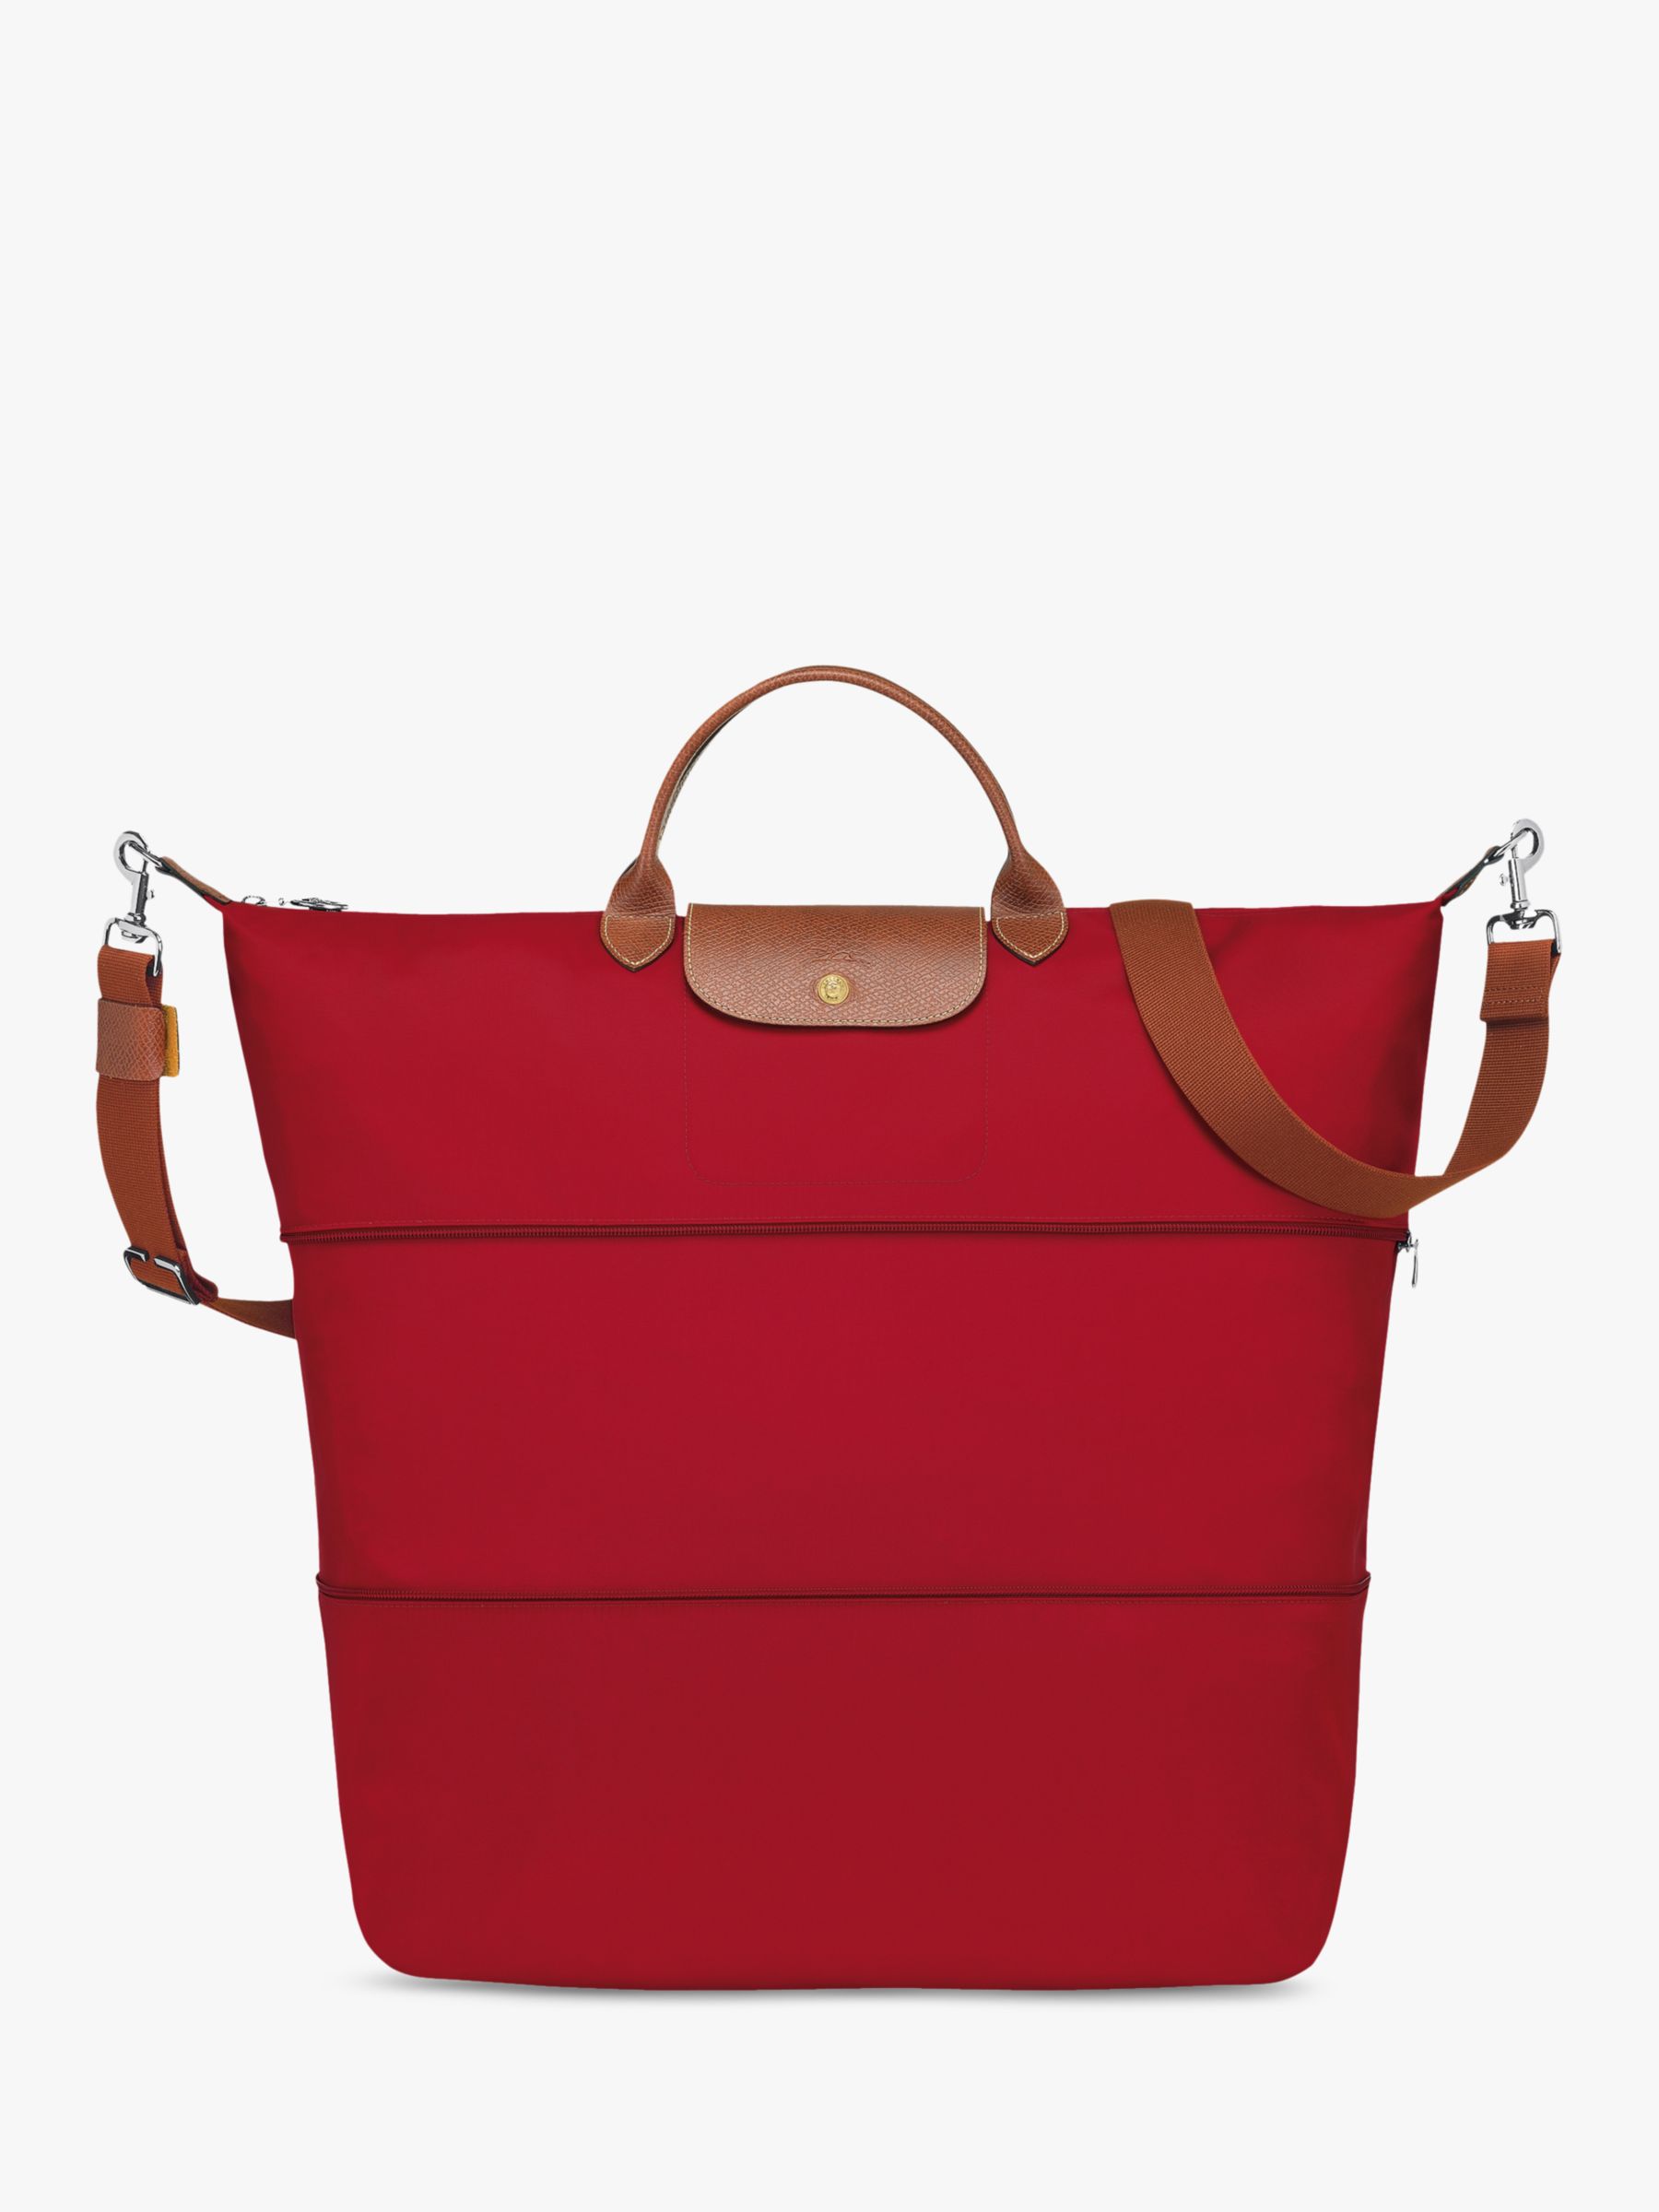 longchamp travel bag red